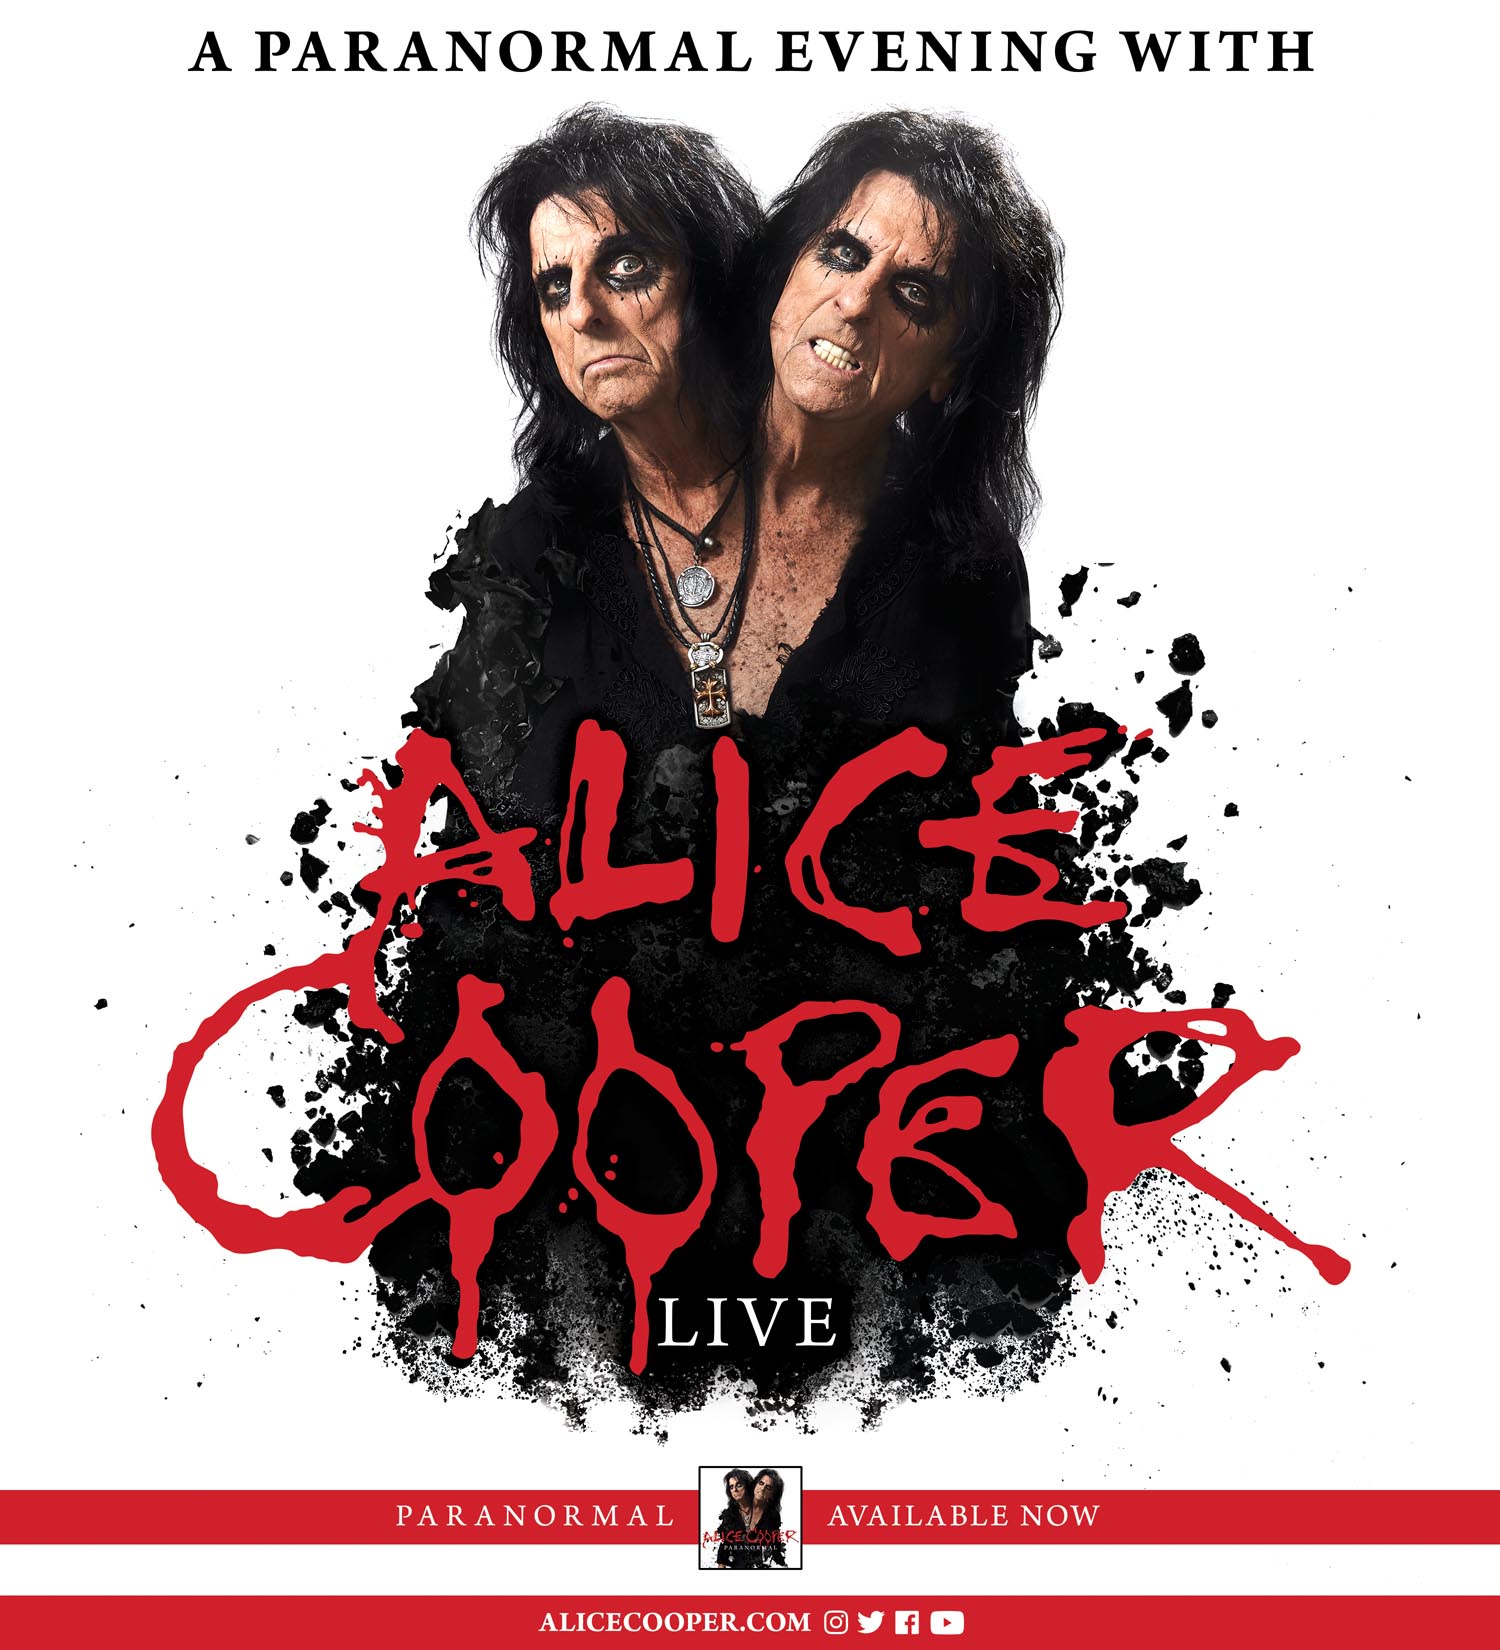 ALICE COOPER ANNOUNCES 2018 NORTH AMERICAN TOUR DATES